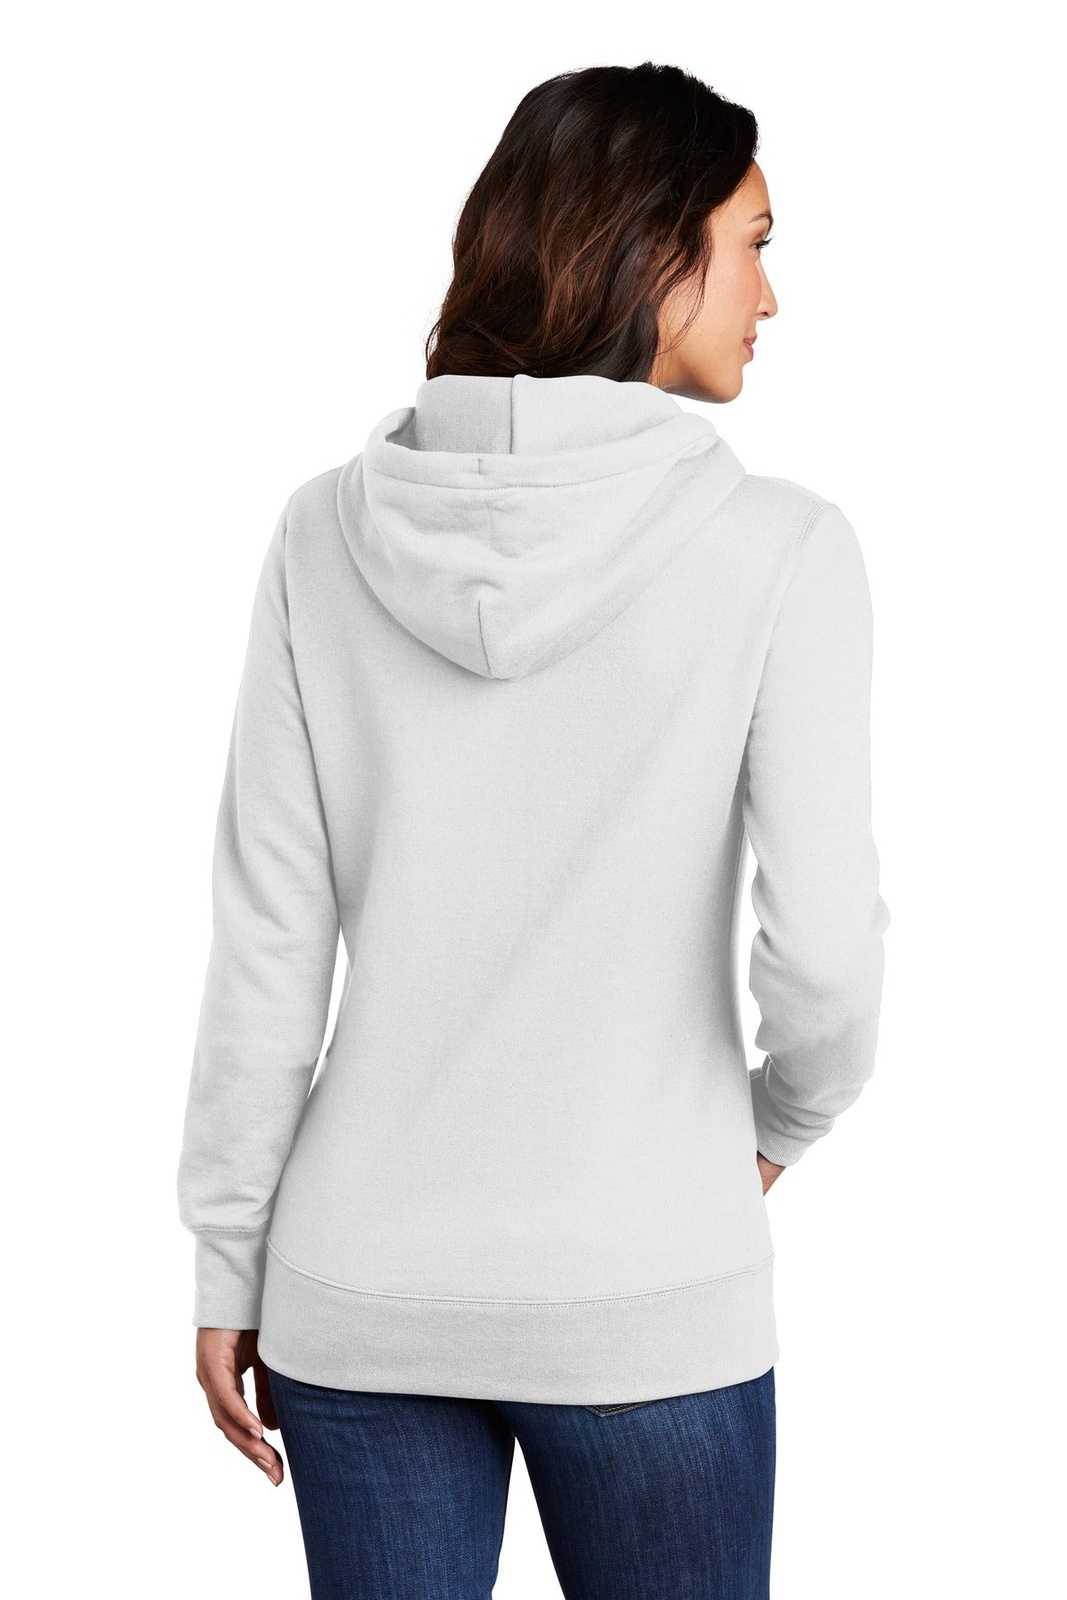 Port & Company LPC78H Ladies Core Fleece Pullover Hooded Sweatshirt - White - HIT a Double - 1